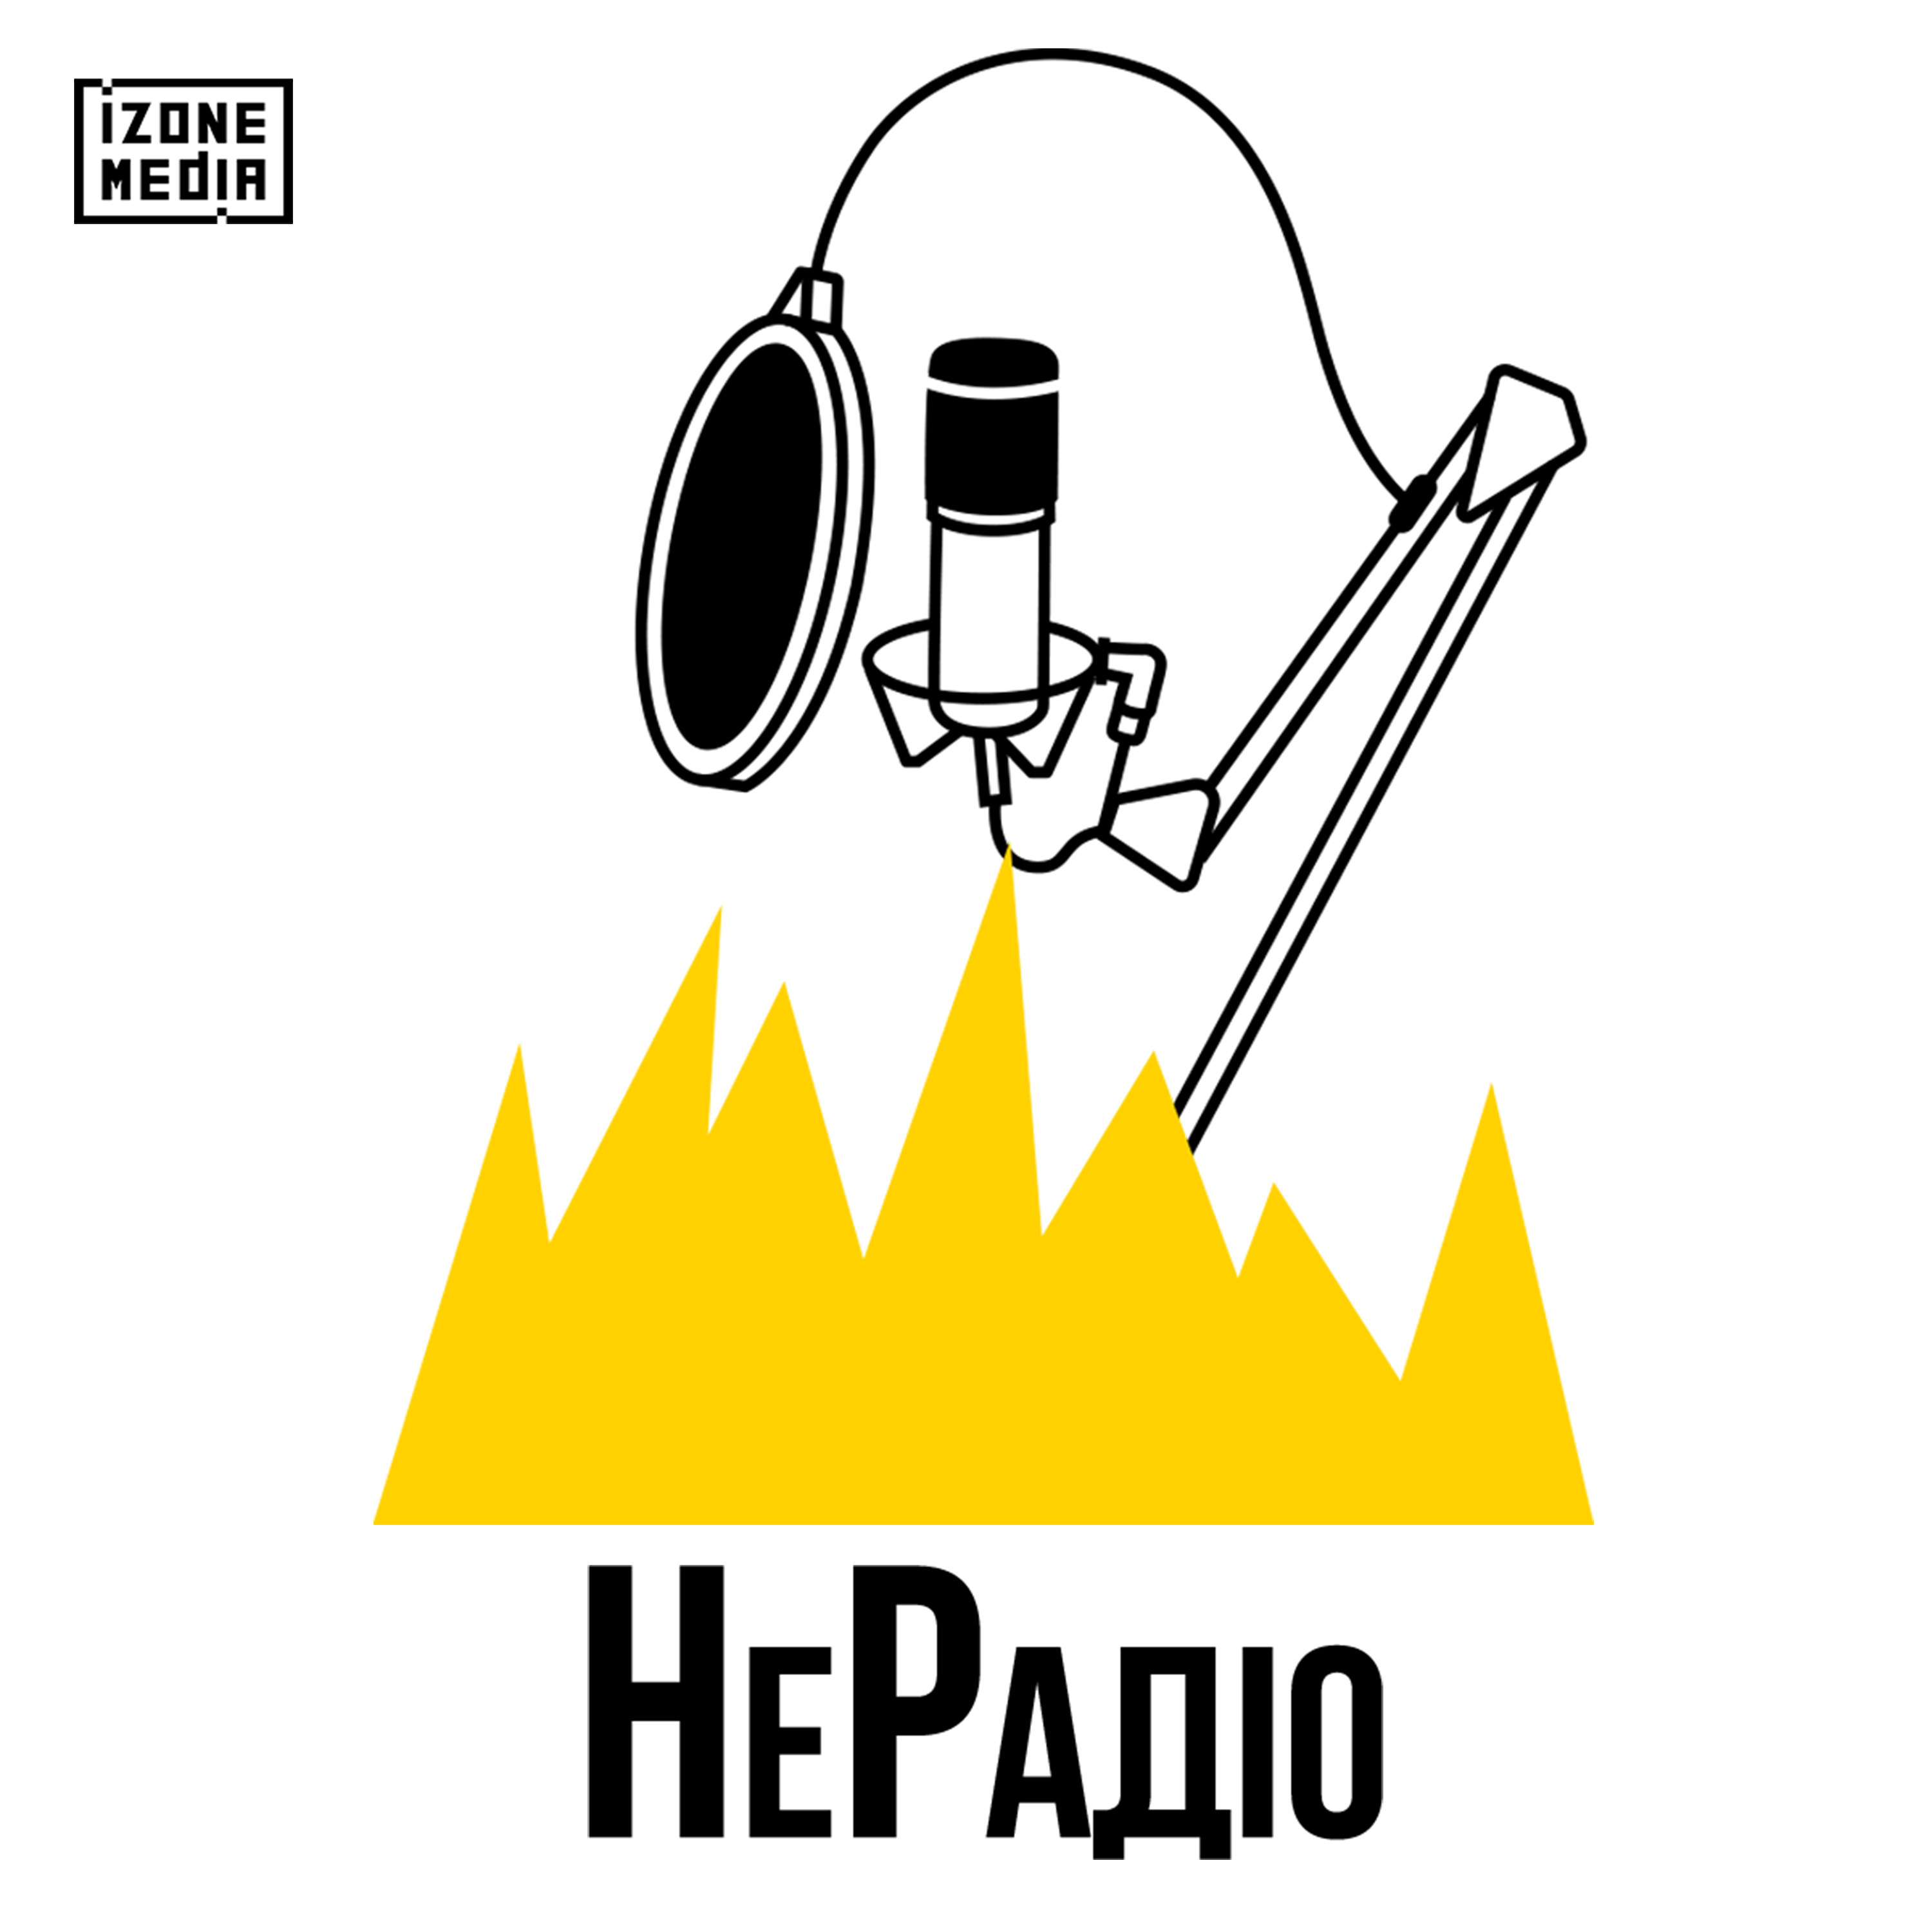 Podcast artwork